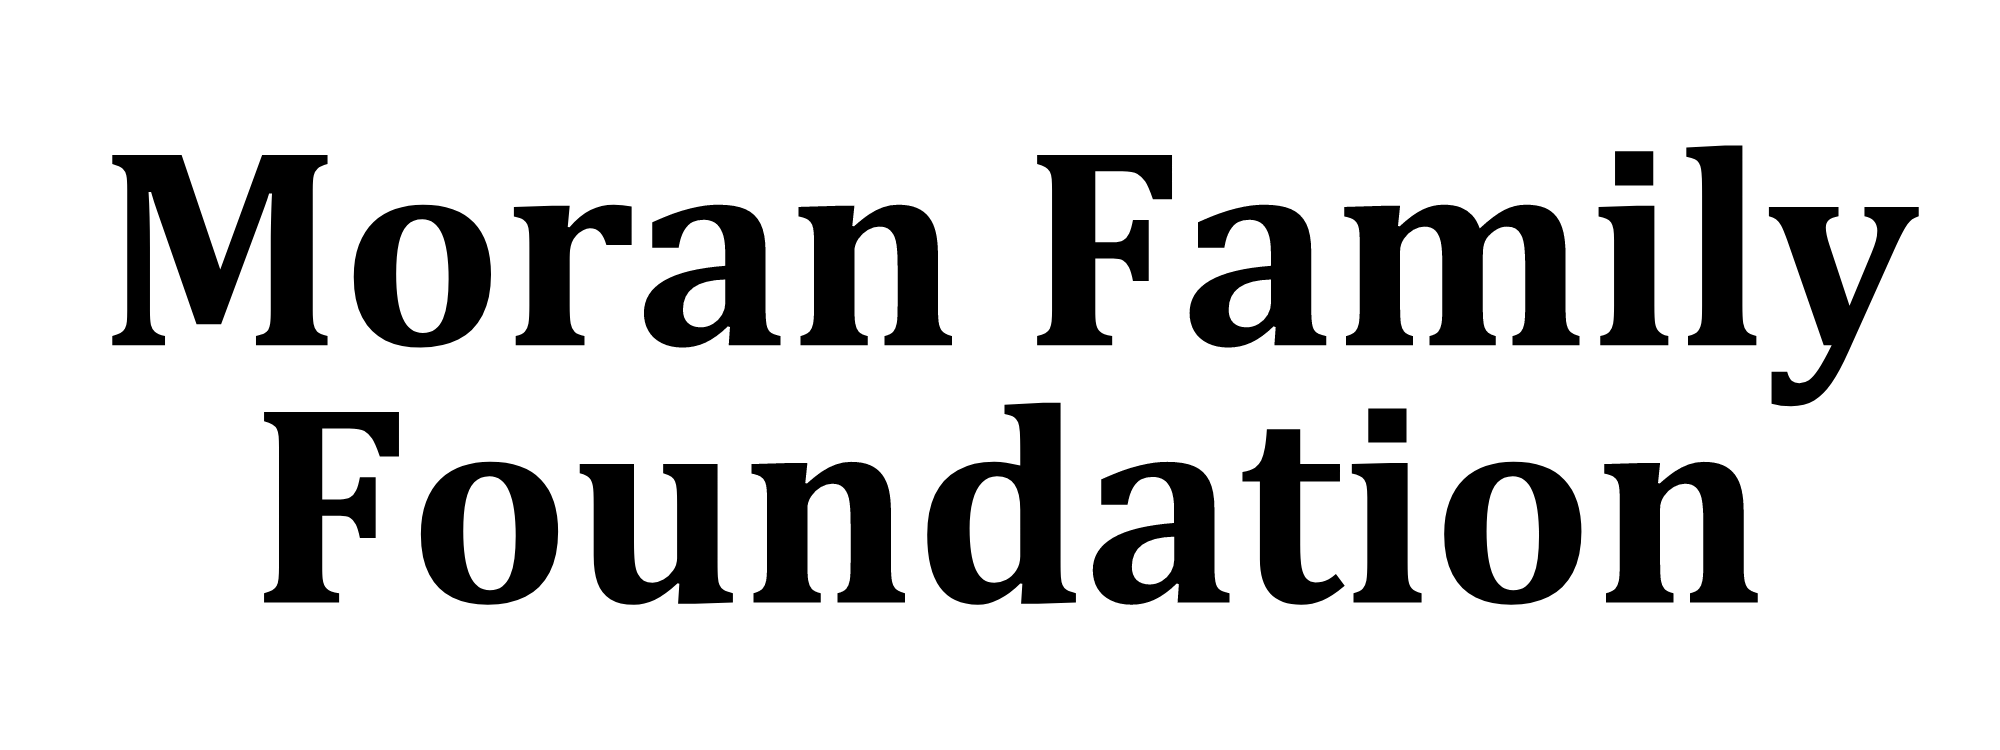 Moran Family Foundation logo.png